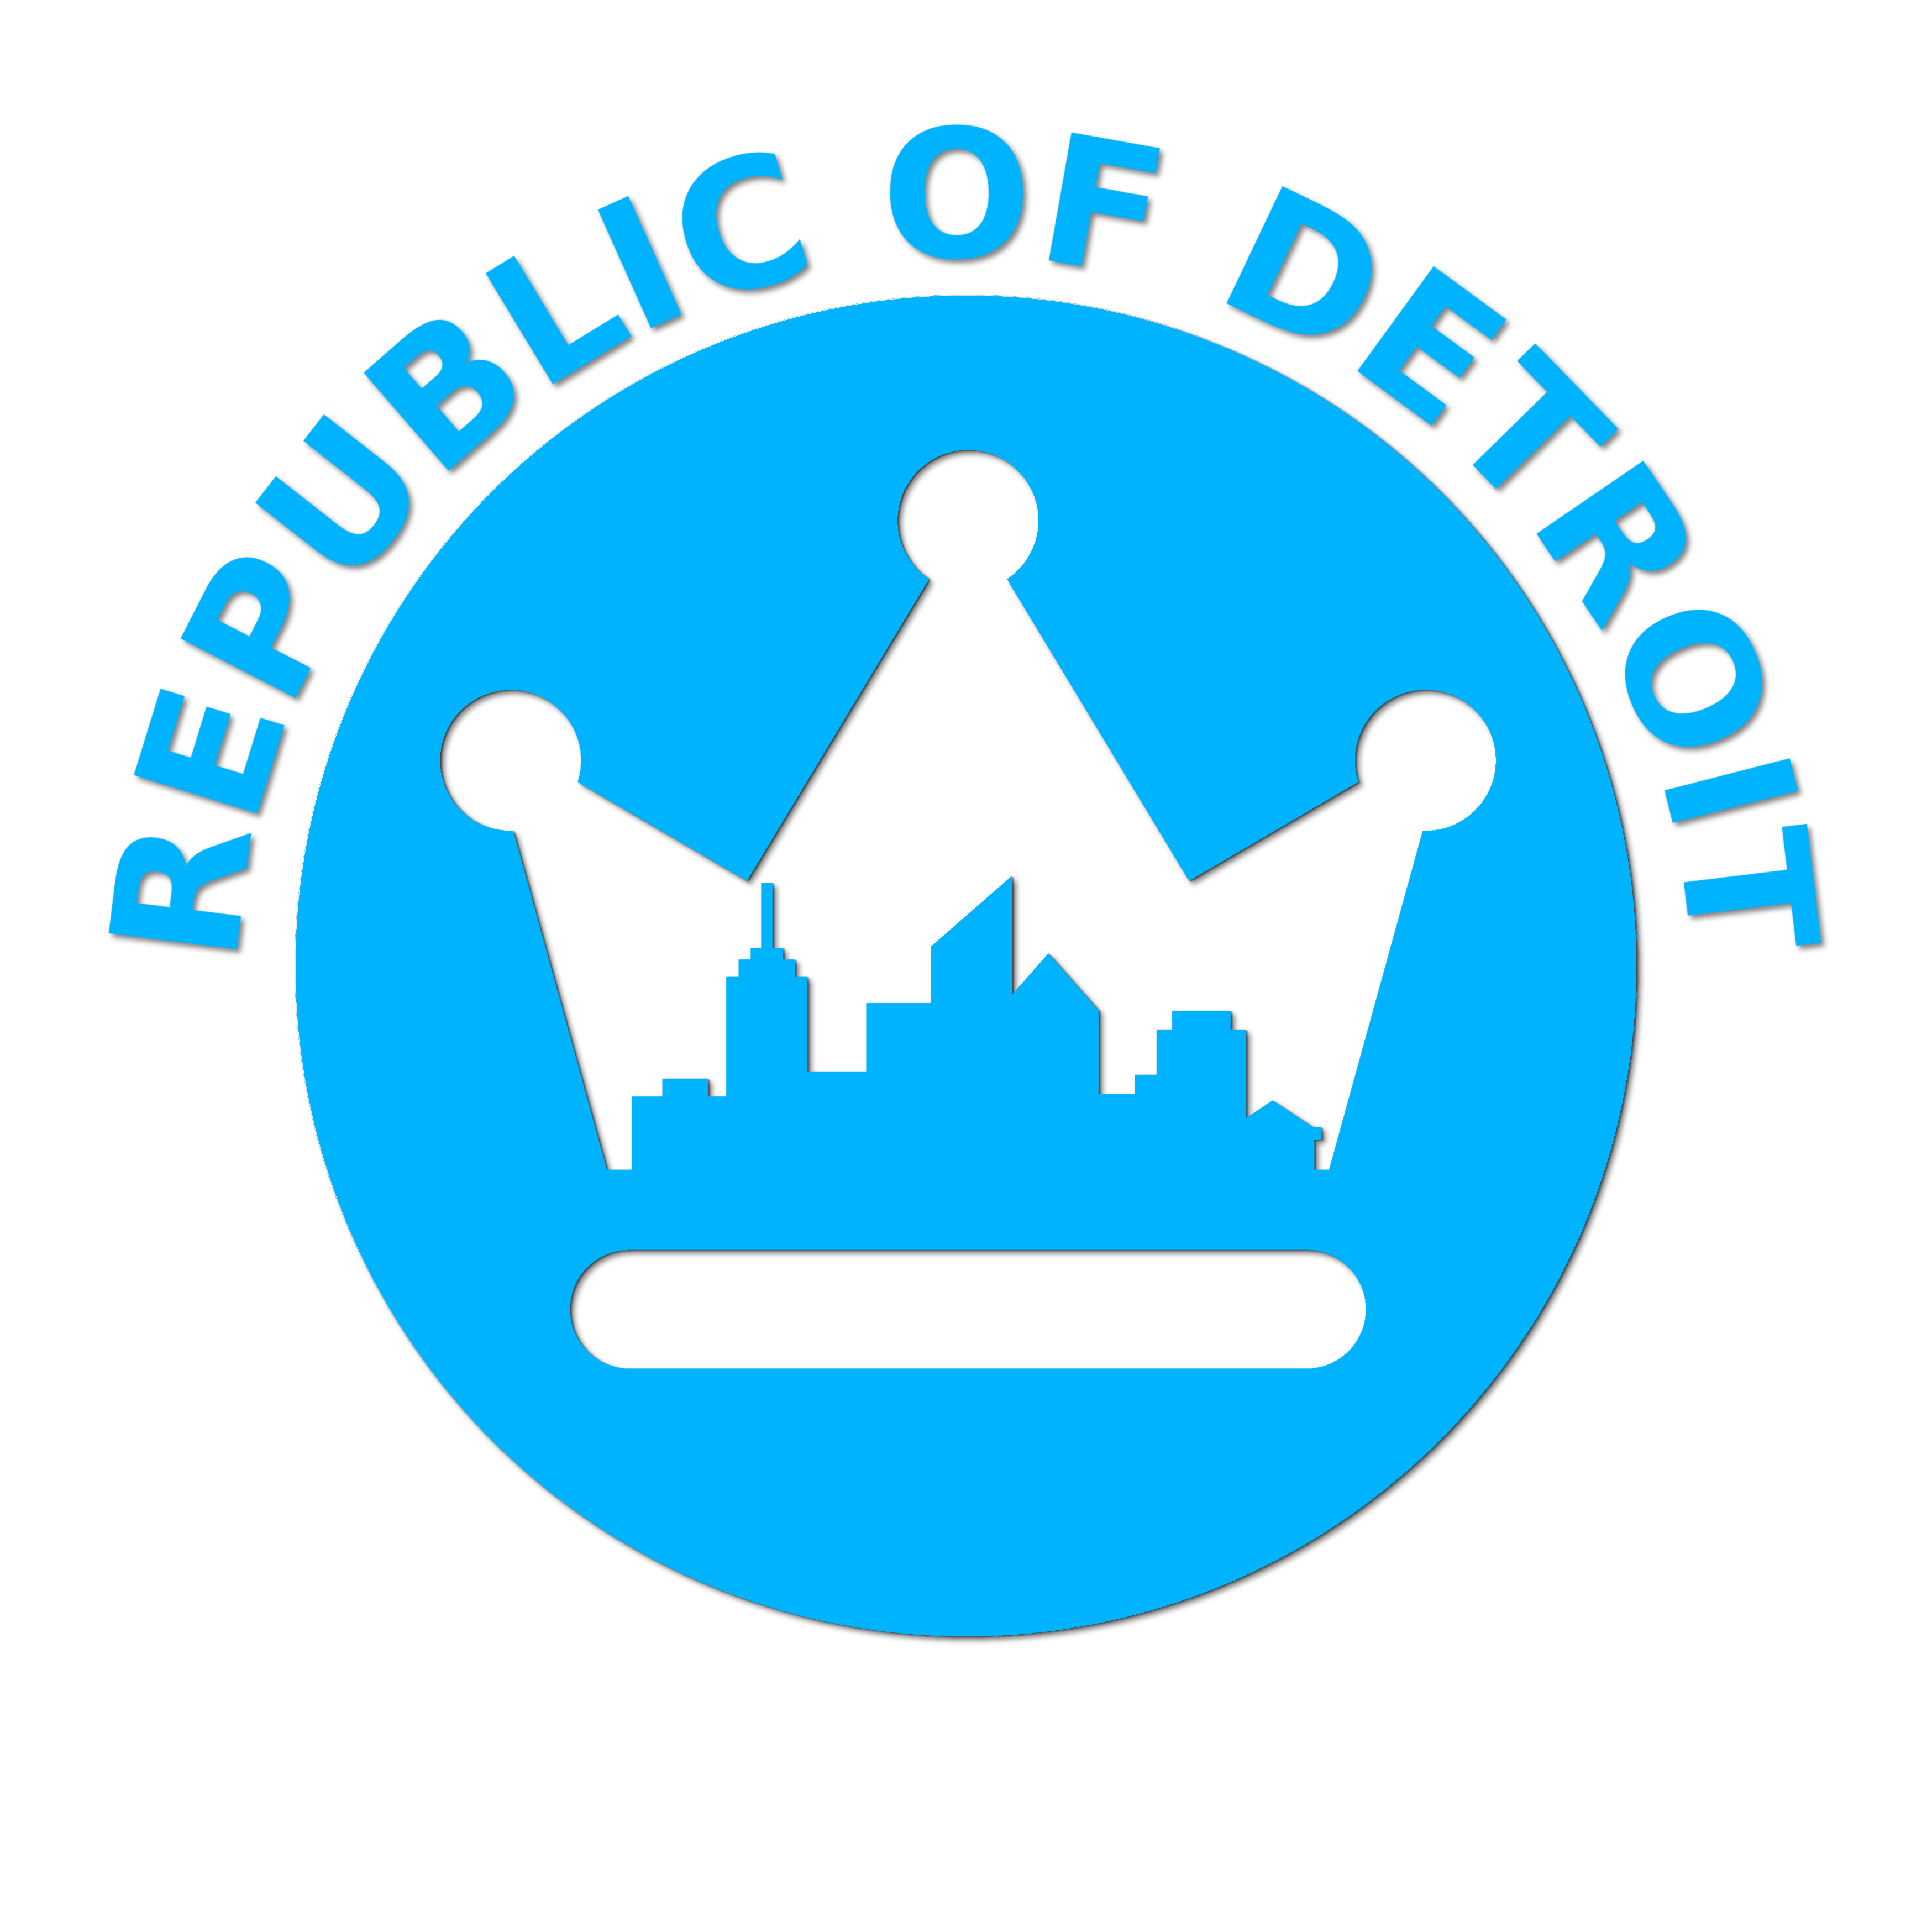 Republic of Detroit logo